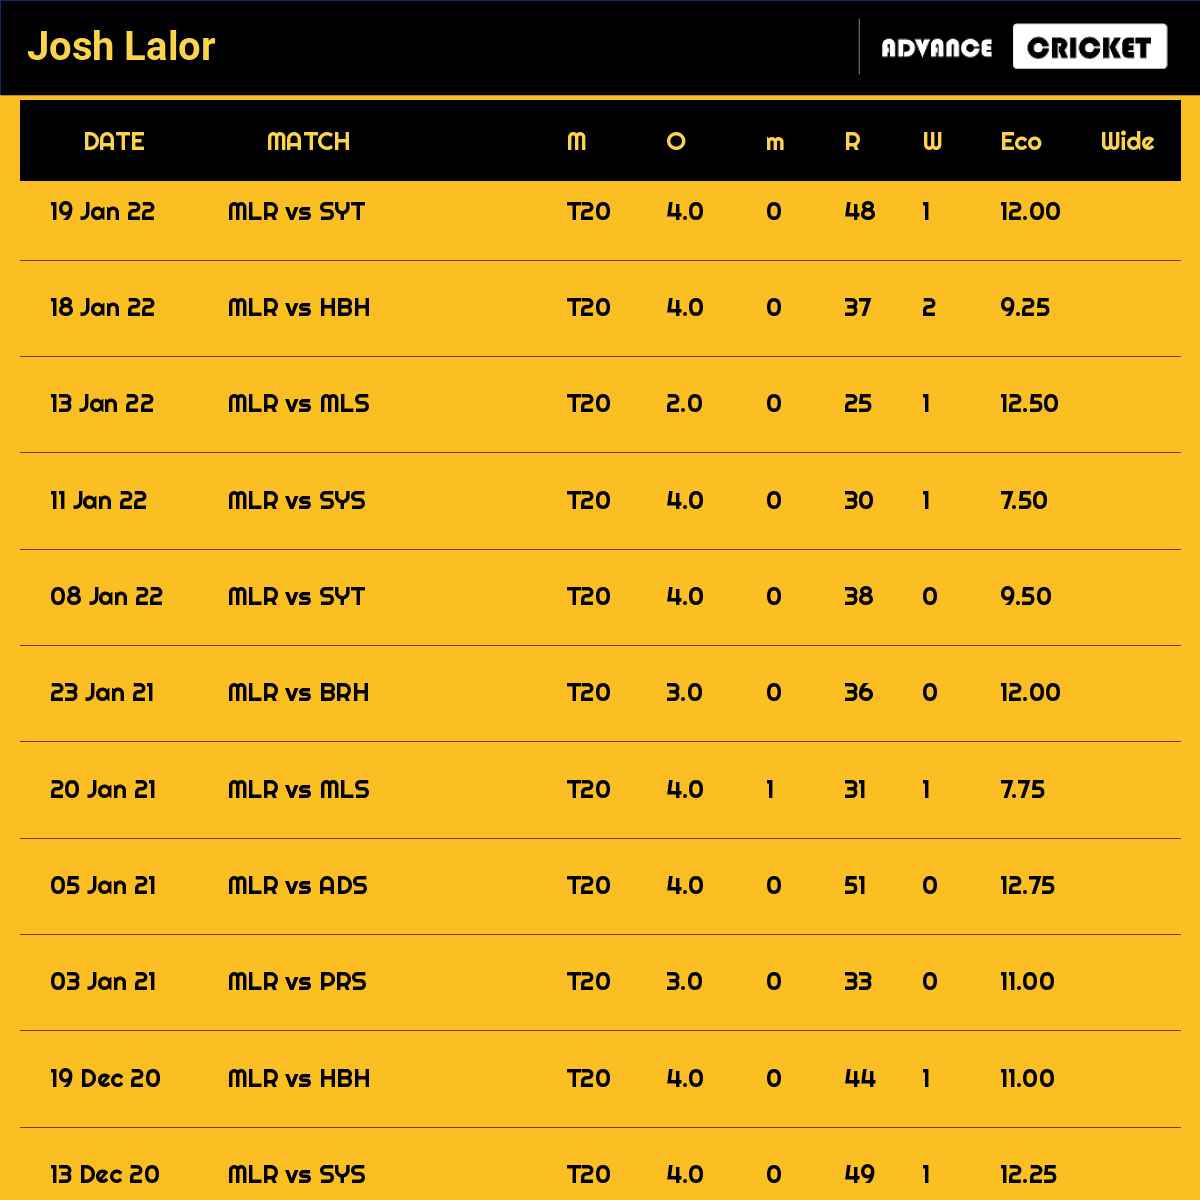 Josh Lalor recent matches